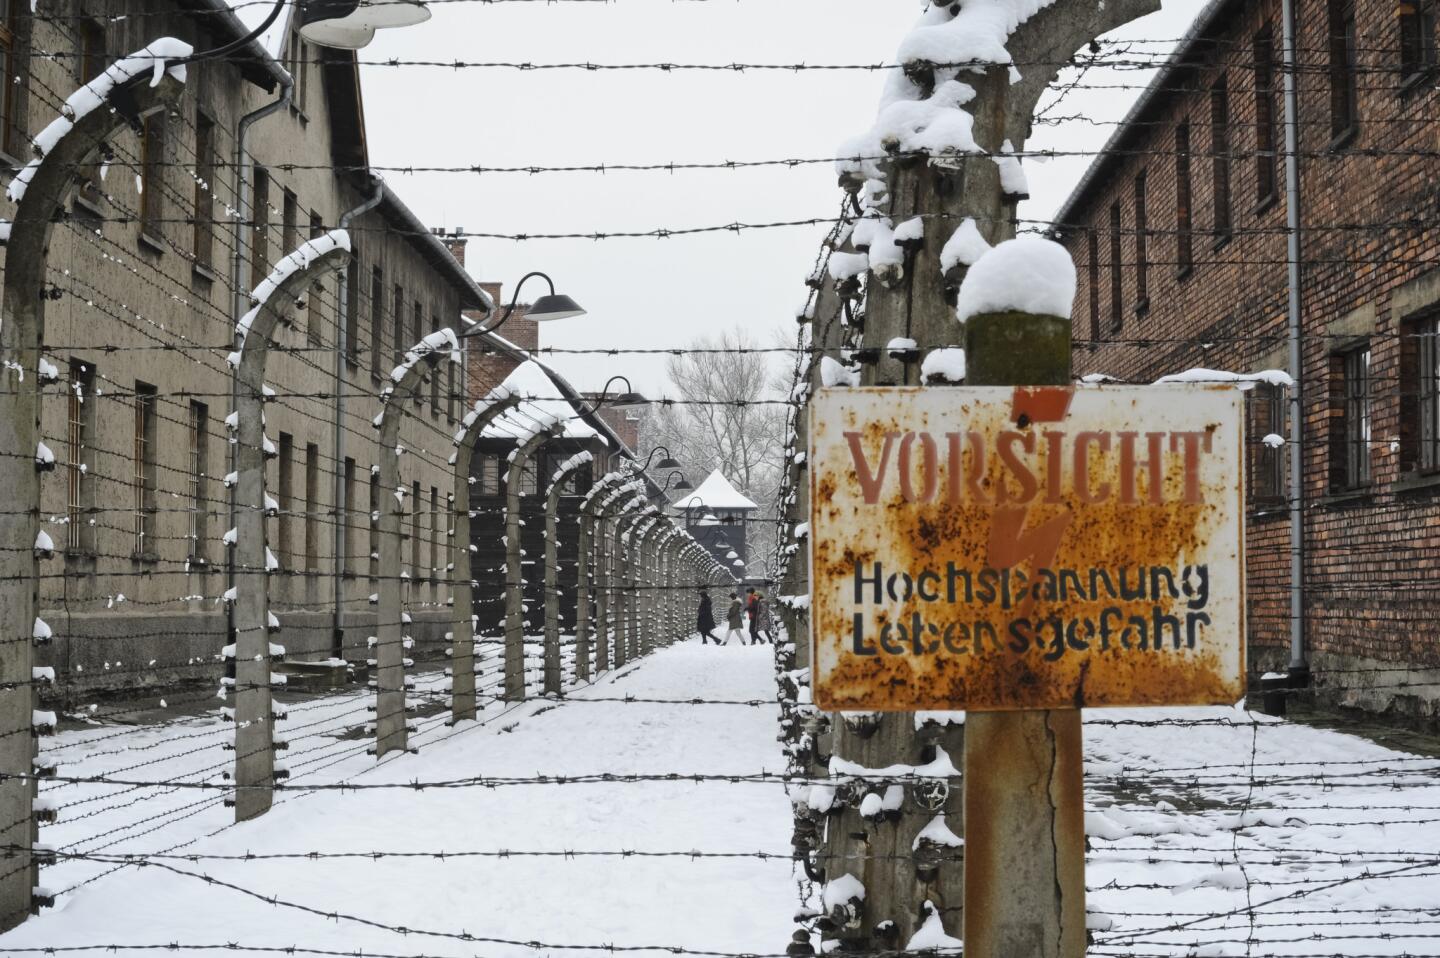 Auschwitz, 70 years after liberation